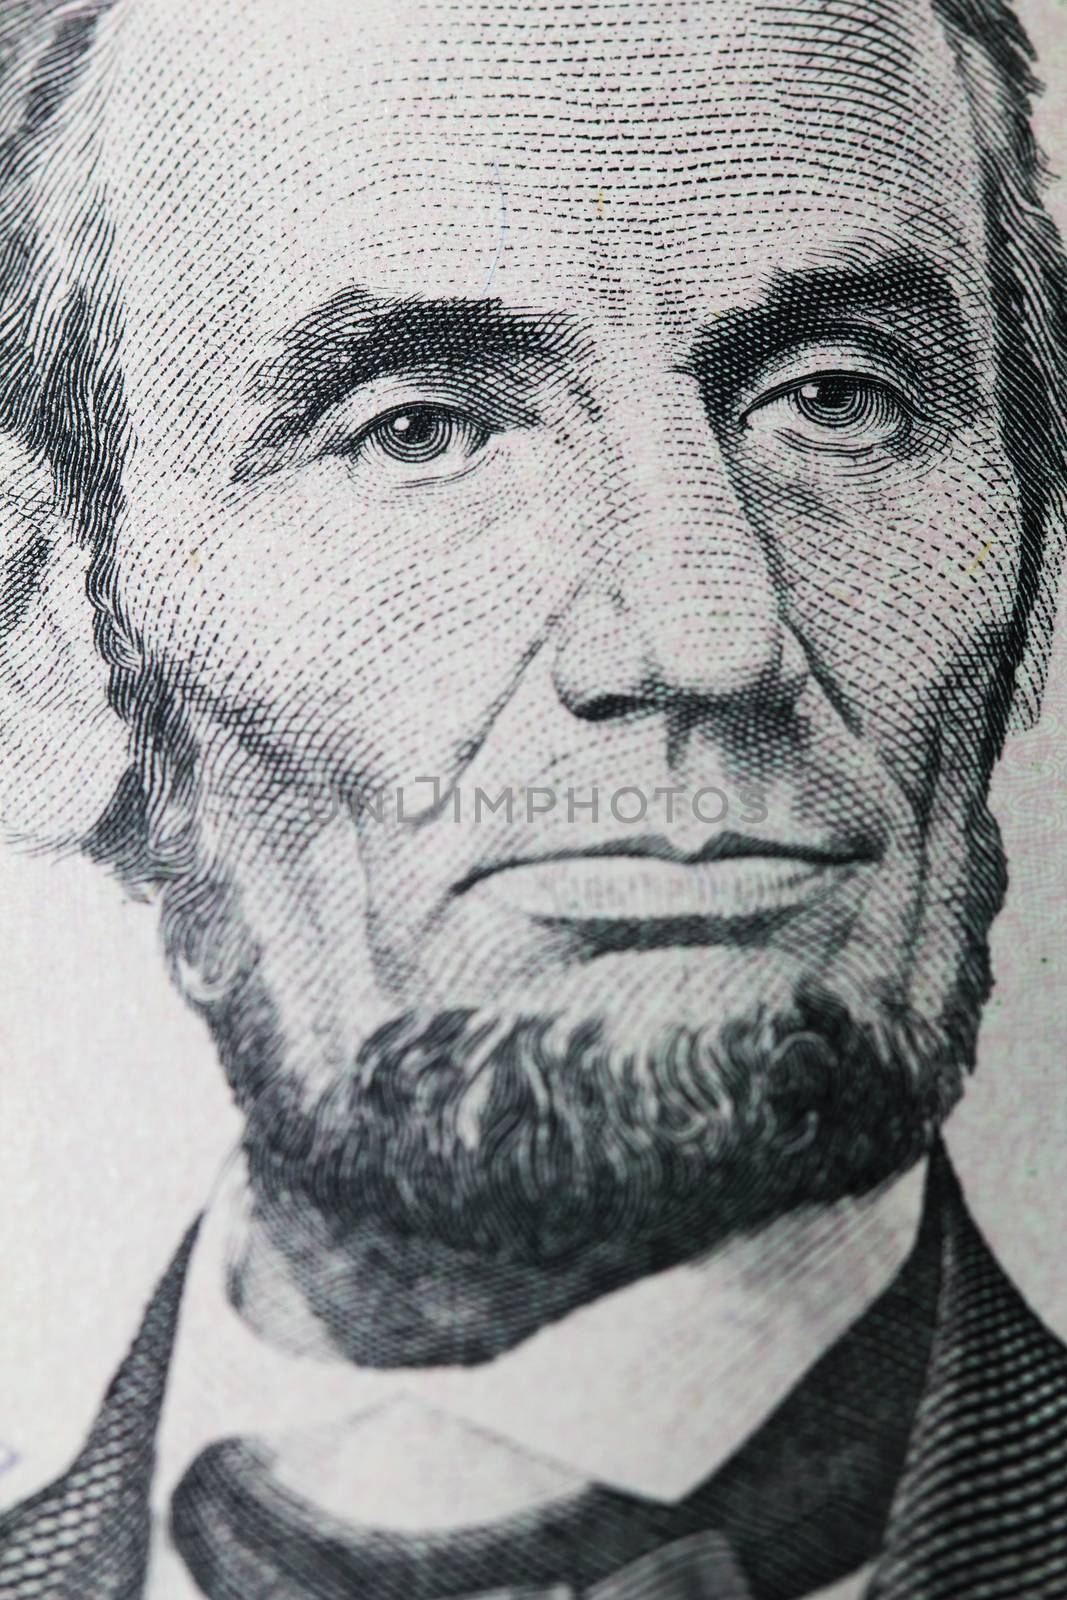 Lincoln portrait on dollar by Voinakh